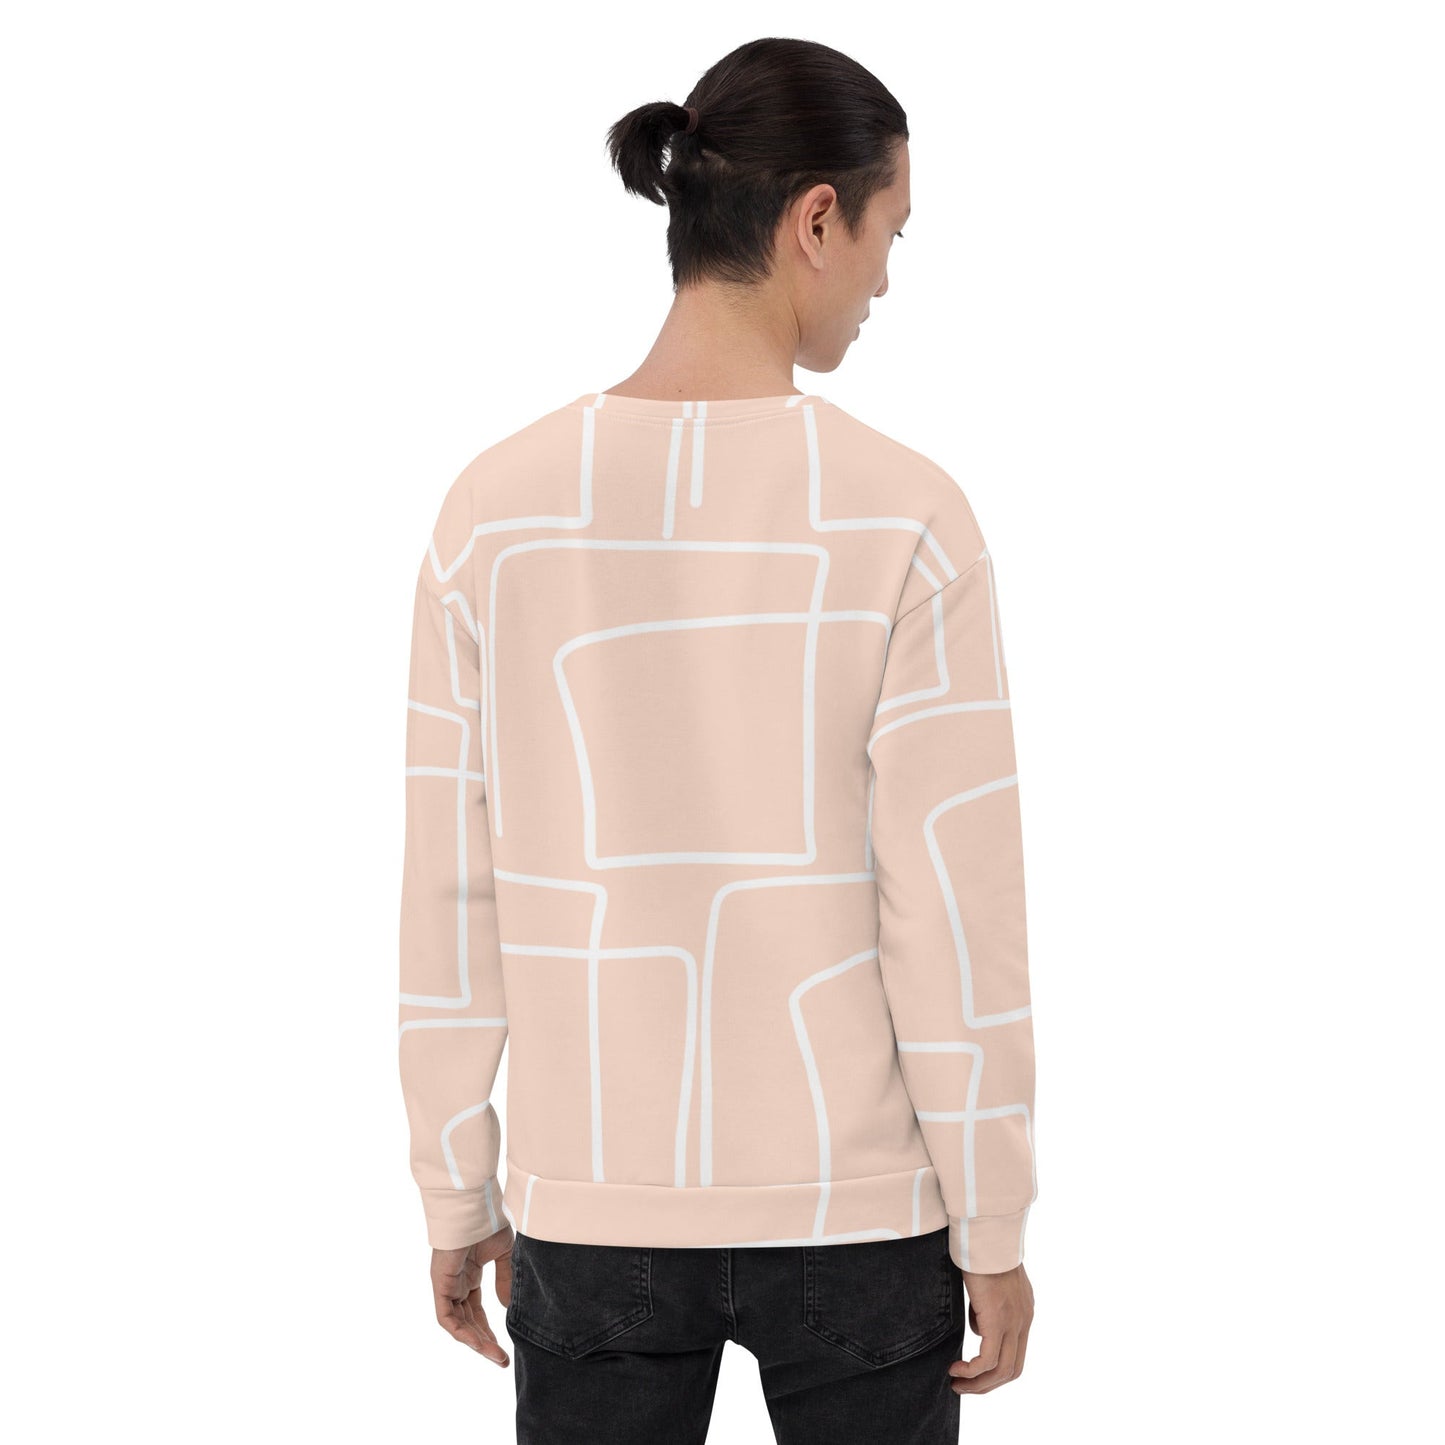 Abstract Grid Unisex Sweatshirt - Love&Tees